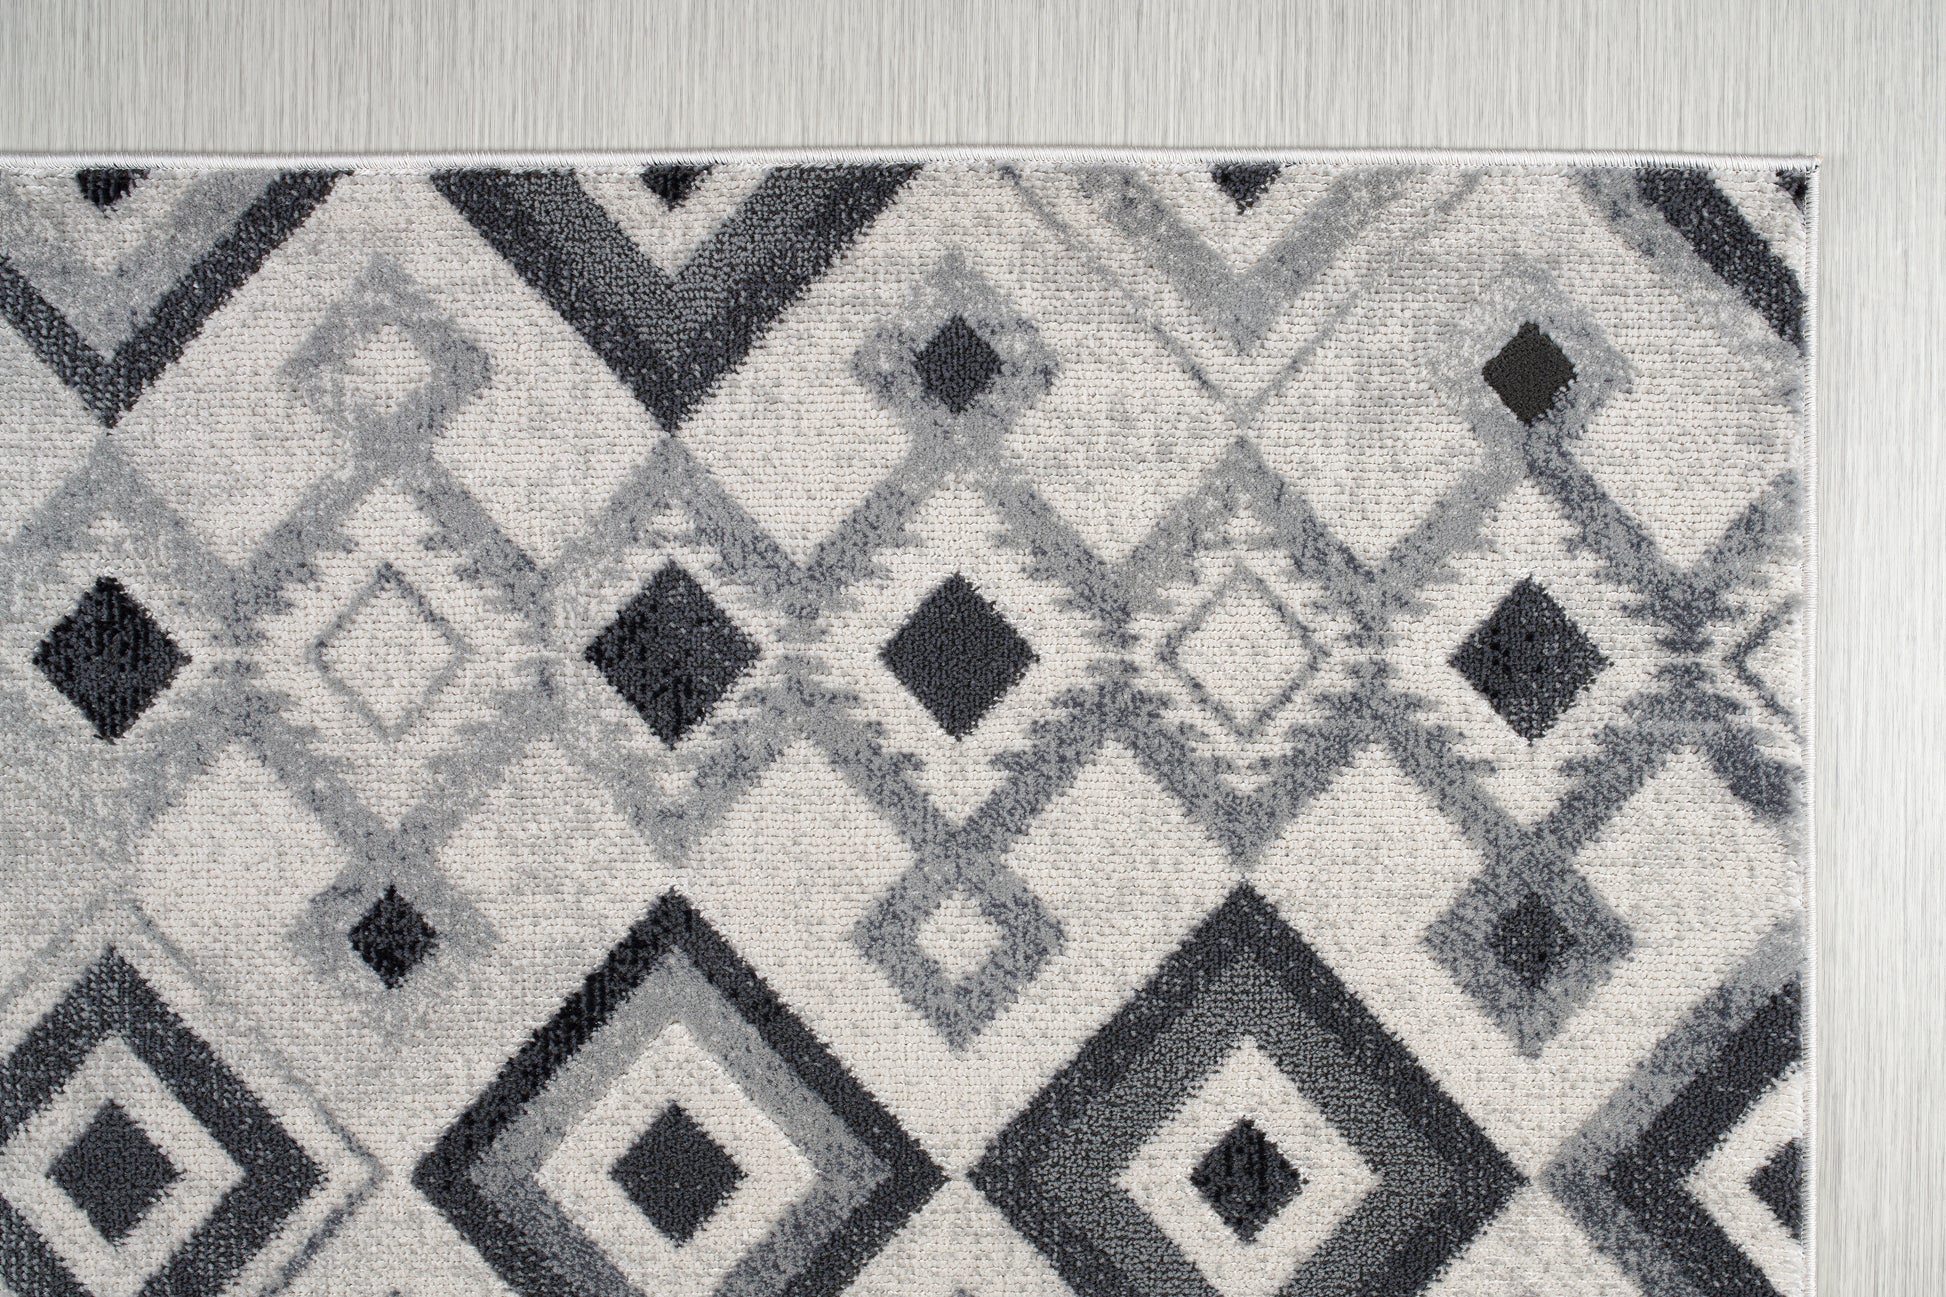 lucas dark light grey modern geometric area rug diamond pattern 8x10, 8x11 ft Large Living Room Carpet, Bedroom, Kitchen